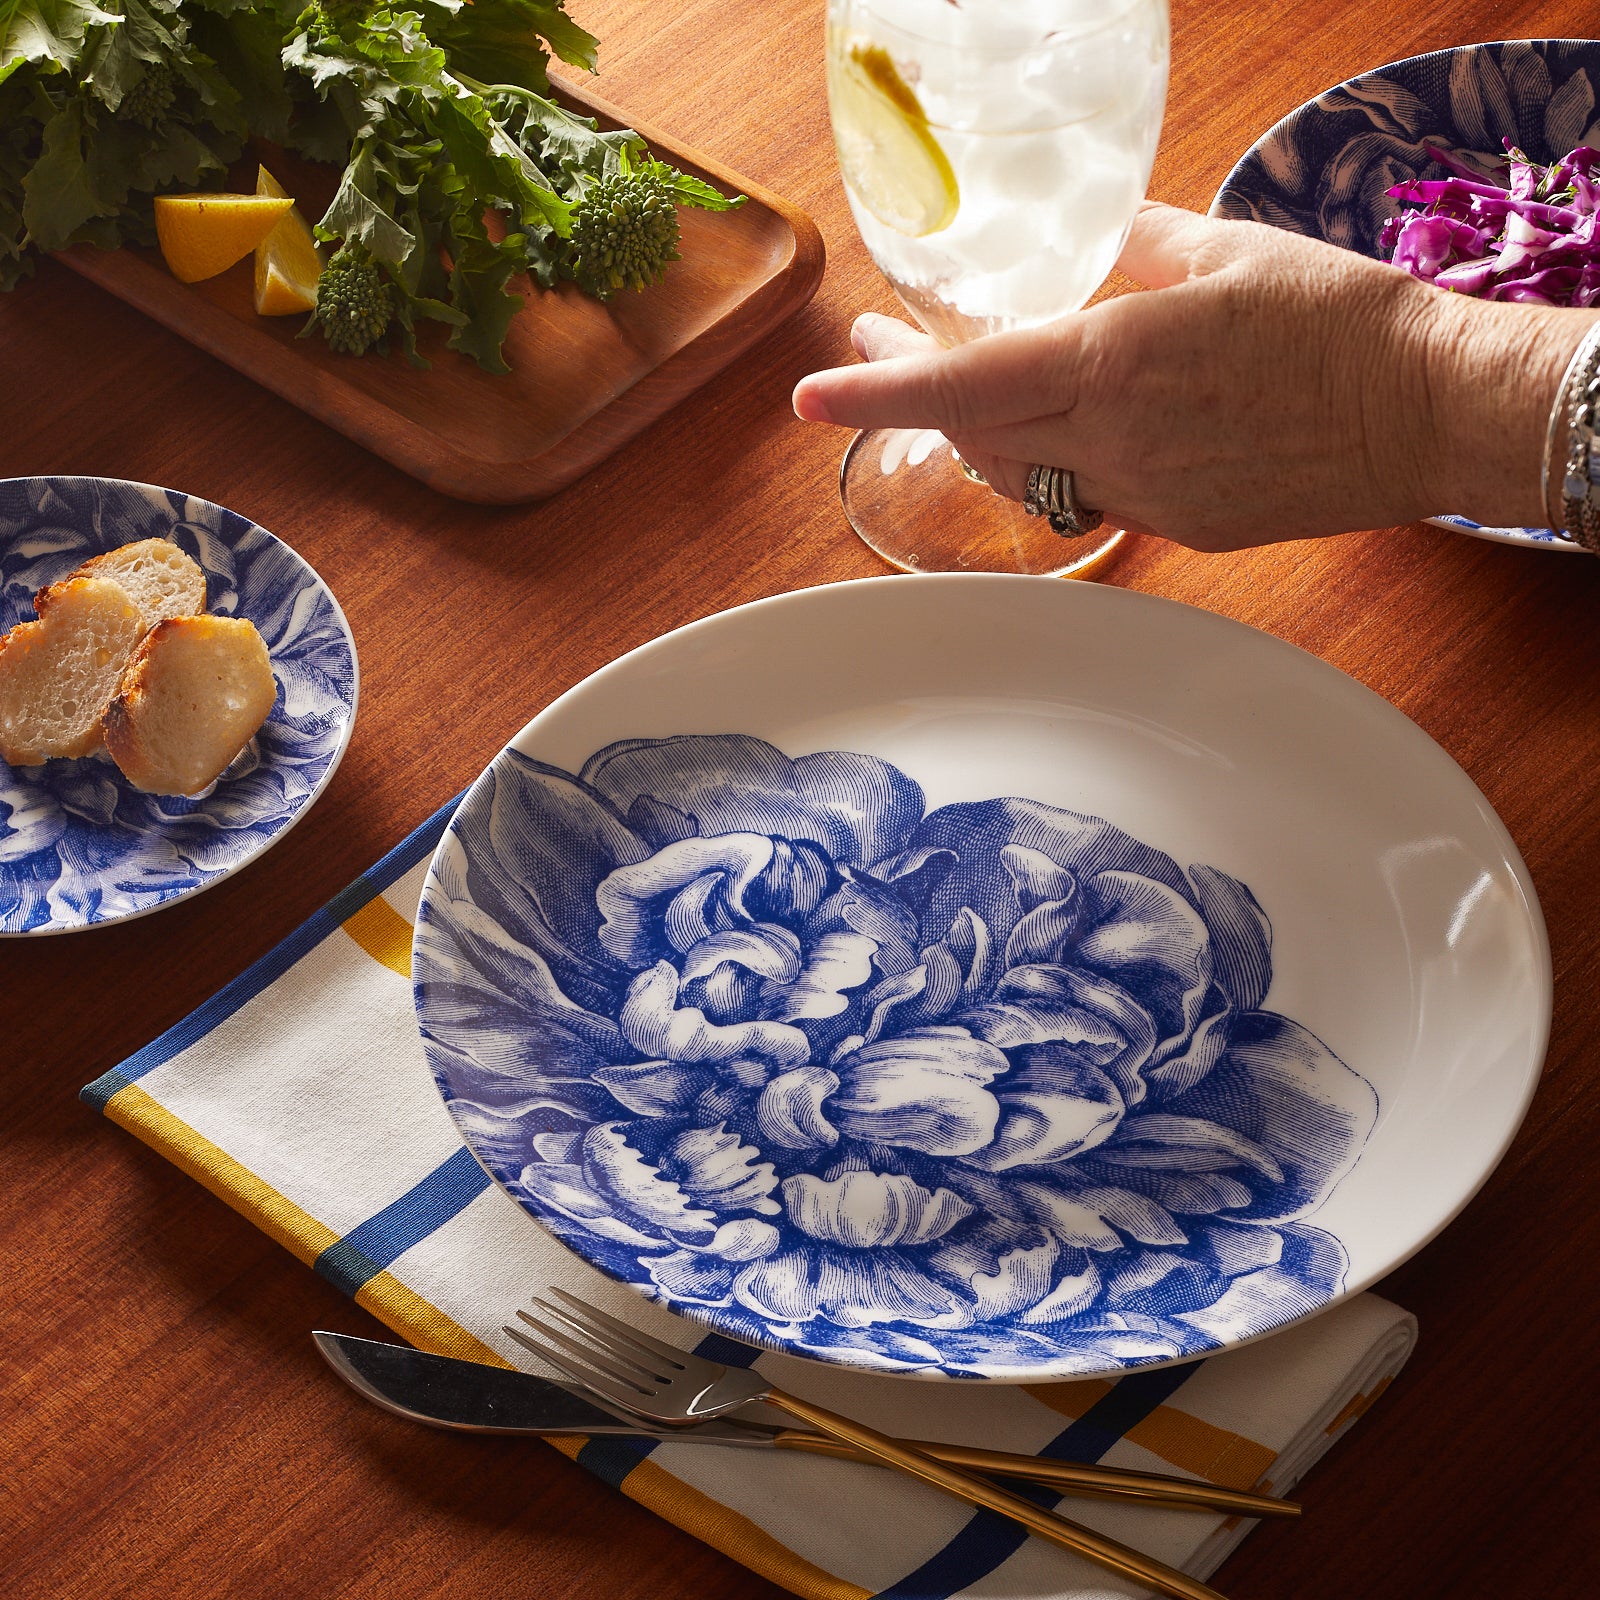 Peony Blue Bloom Coupe Dinner Plate - Caskata